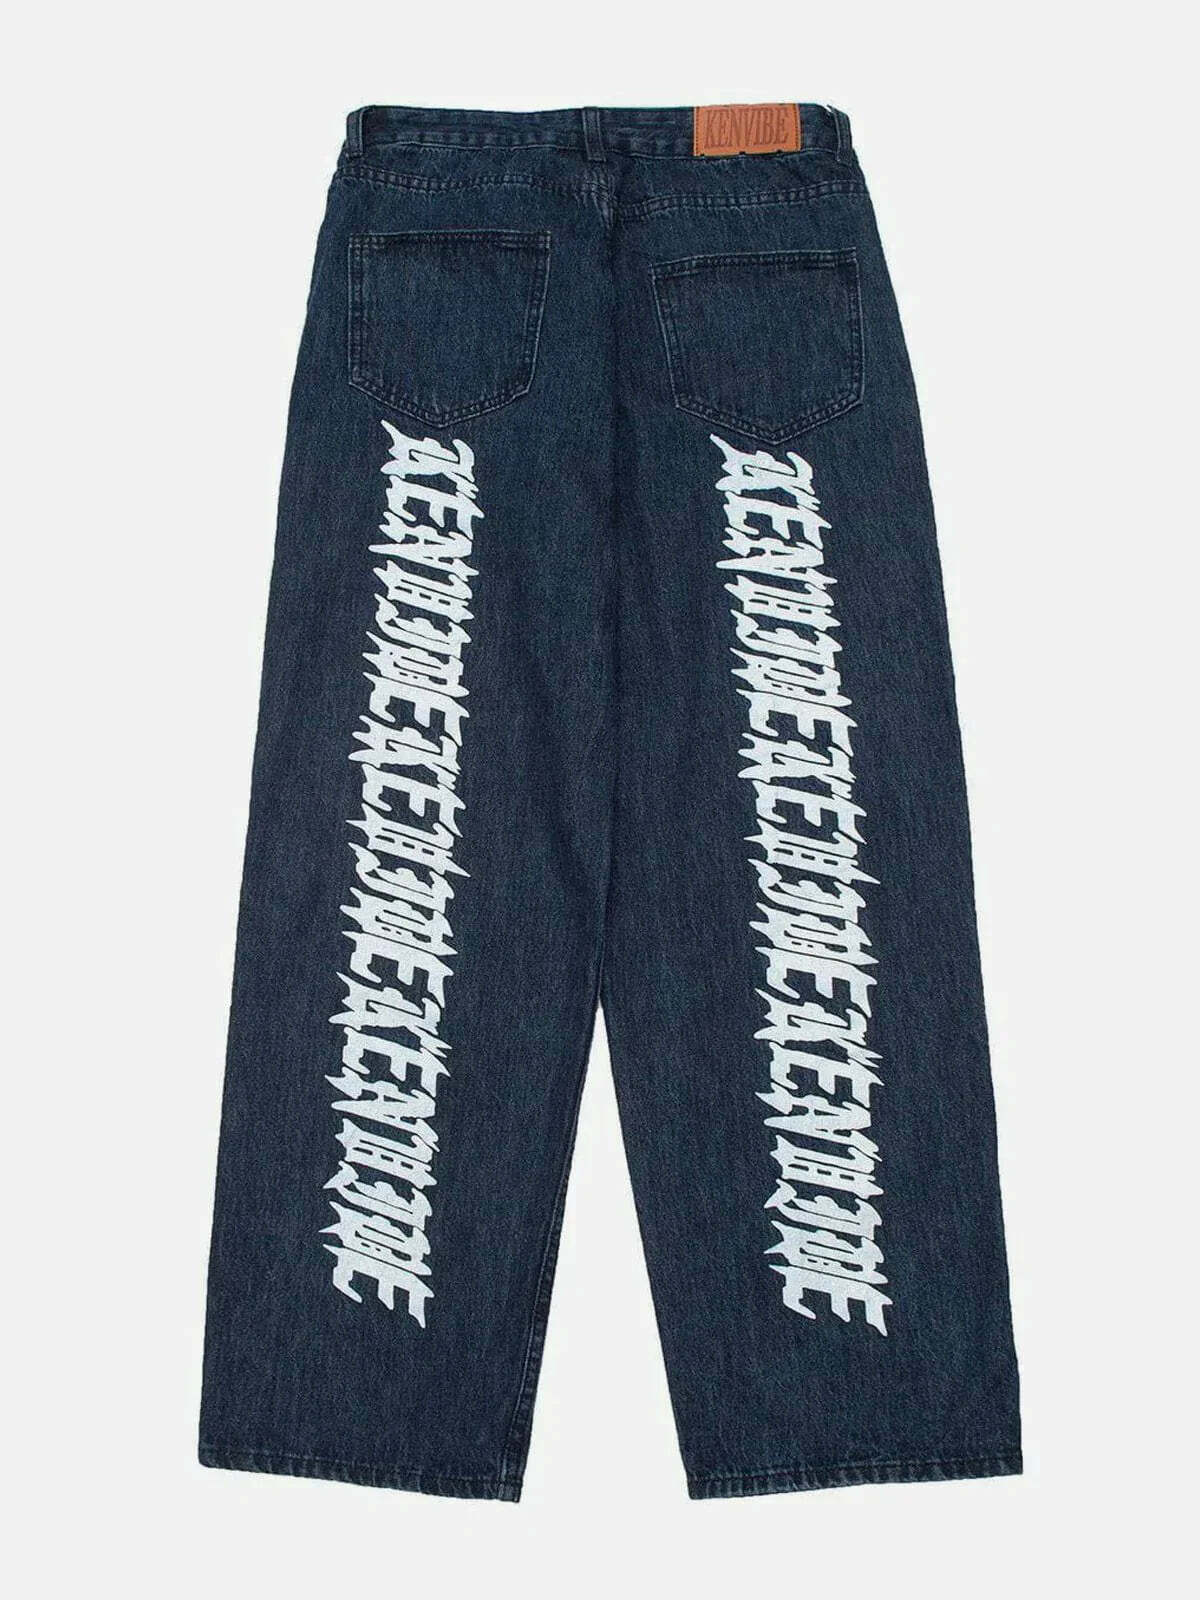 vintage denim patchwork jeans edgy streetwear essential 5001